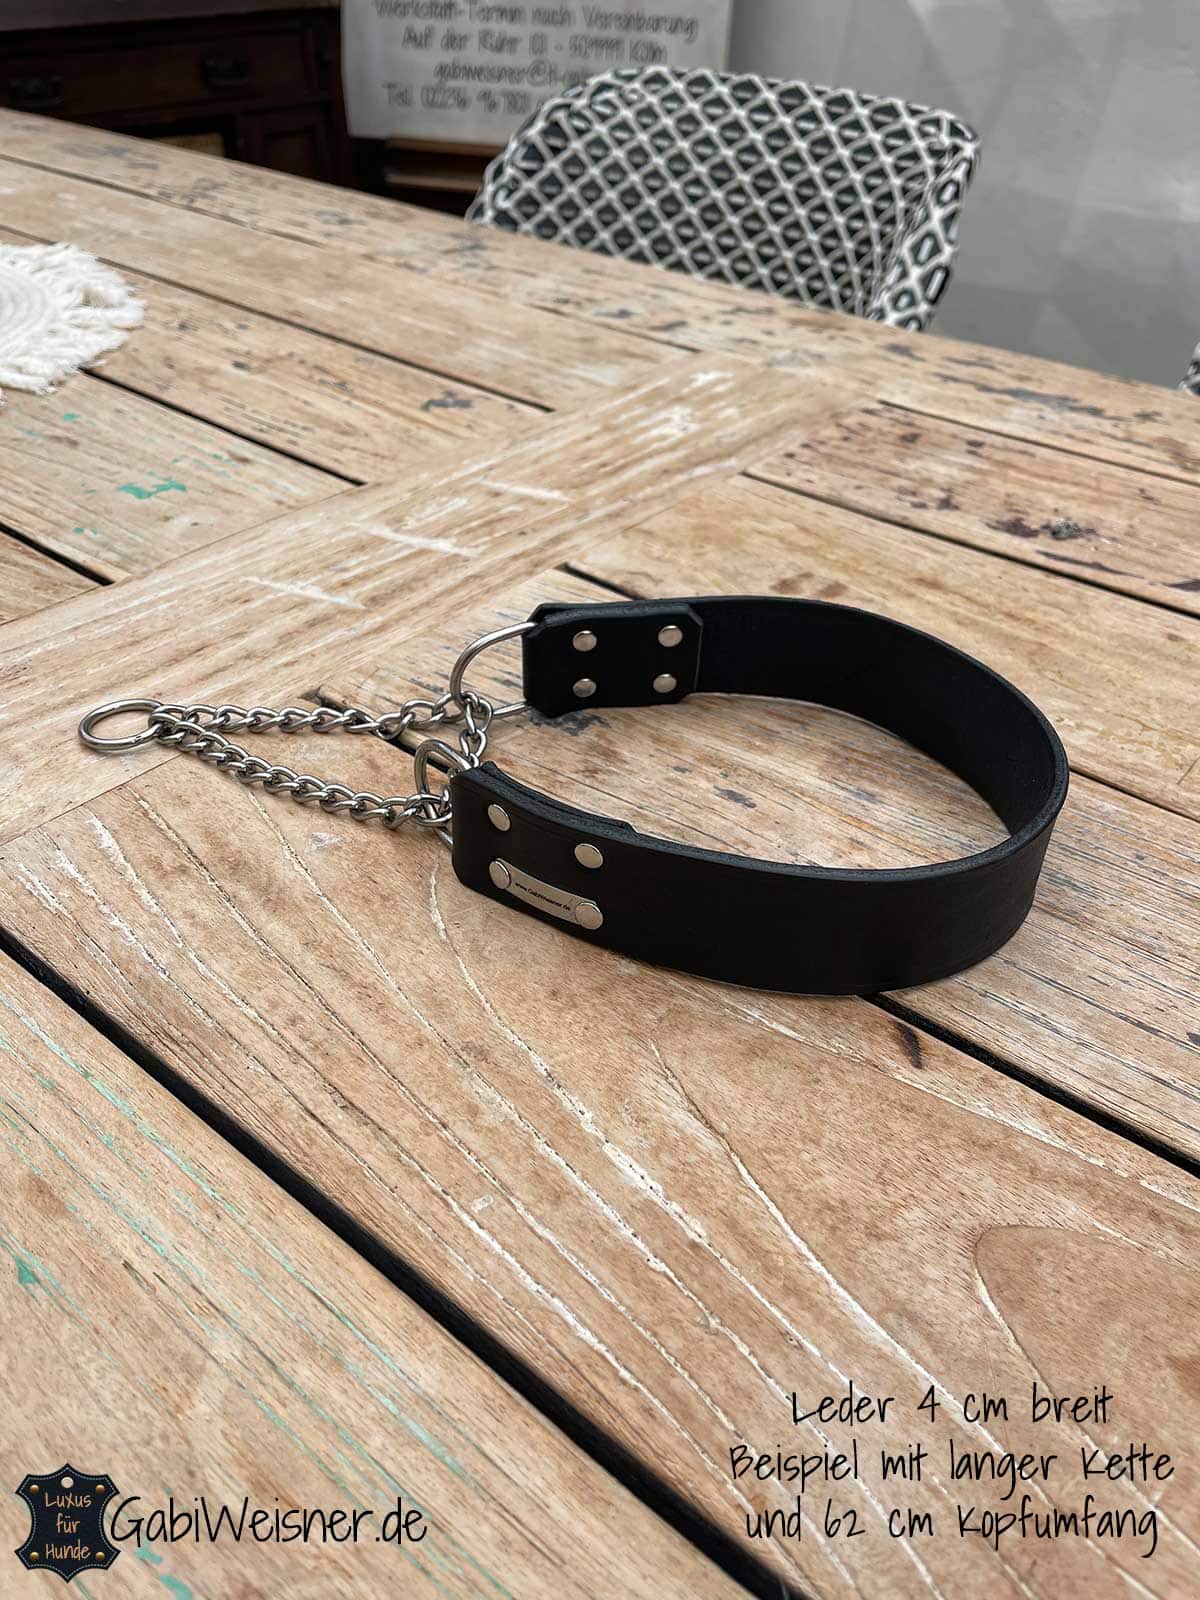 Hundehalsband, eine Lage Leder cm 4 breit, Zugstoppkette